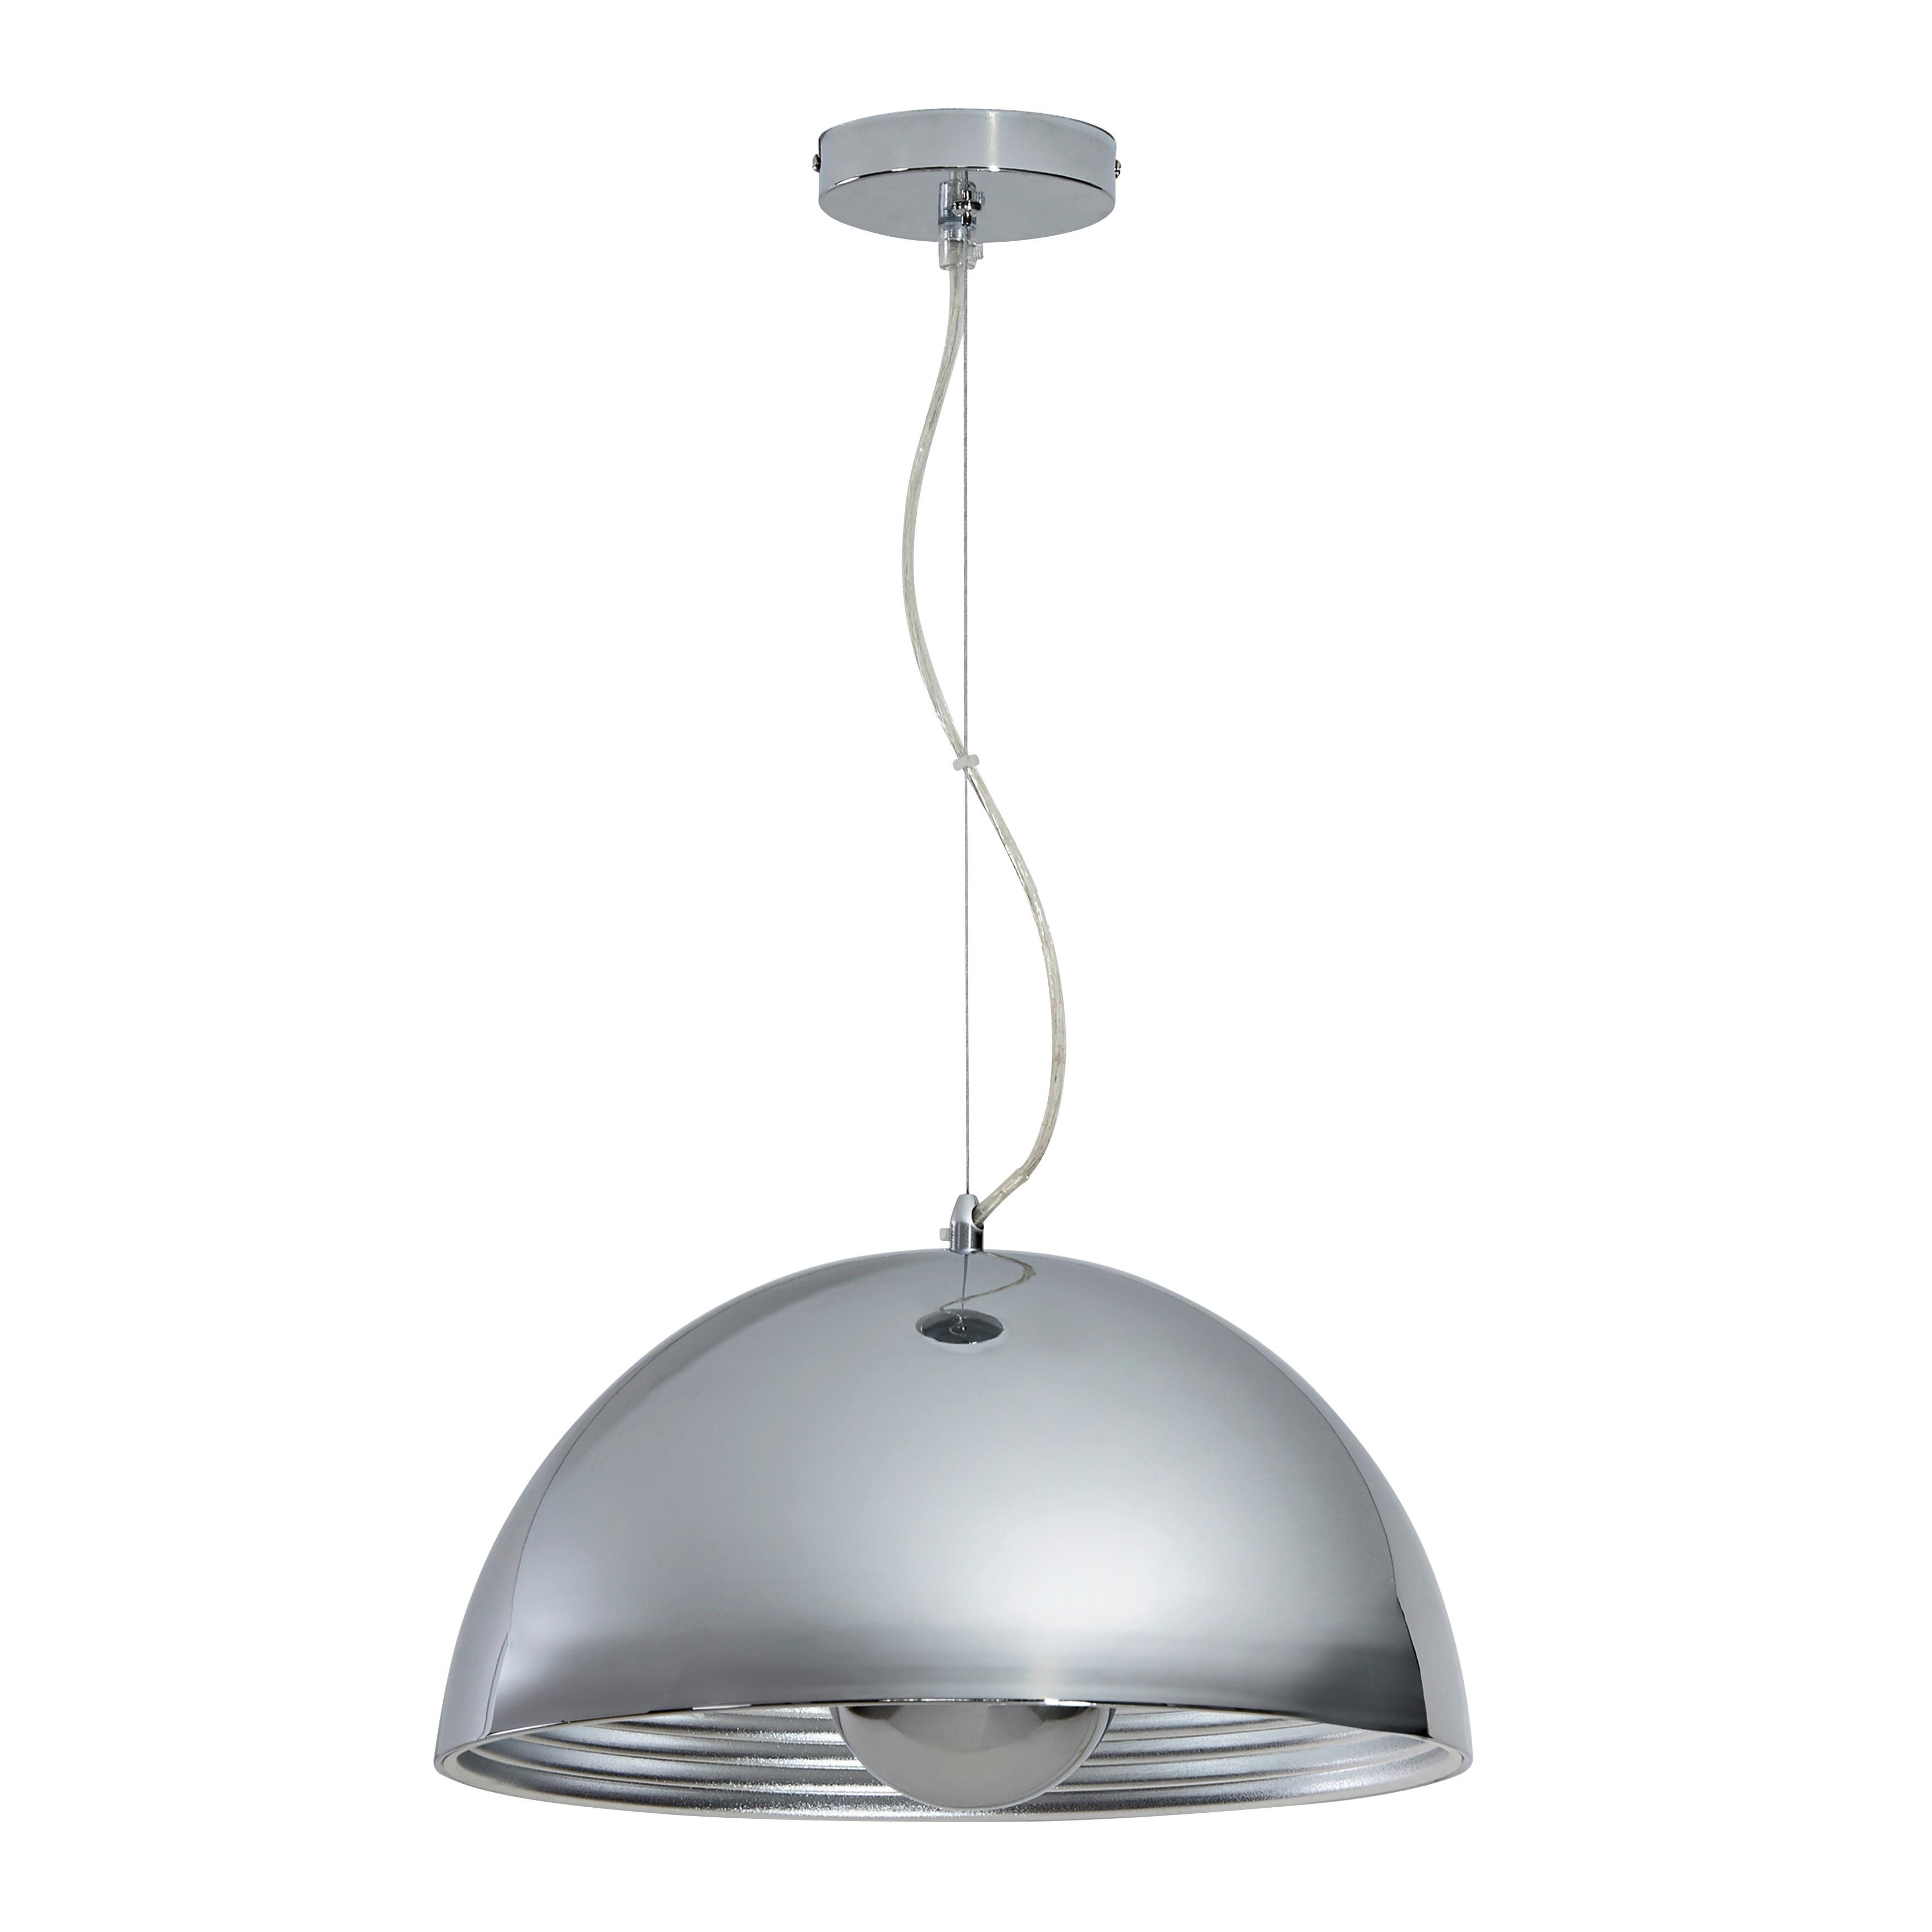 Závěsná Lampa Isa - barvy stříbra/barvy chromu, Moderní, kov (40/40/130cm) - Bessagi Home